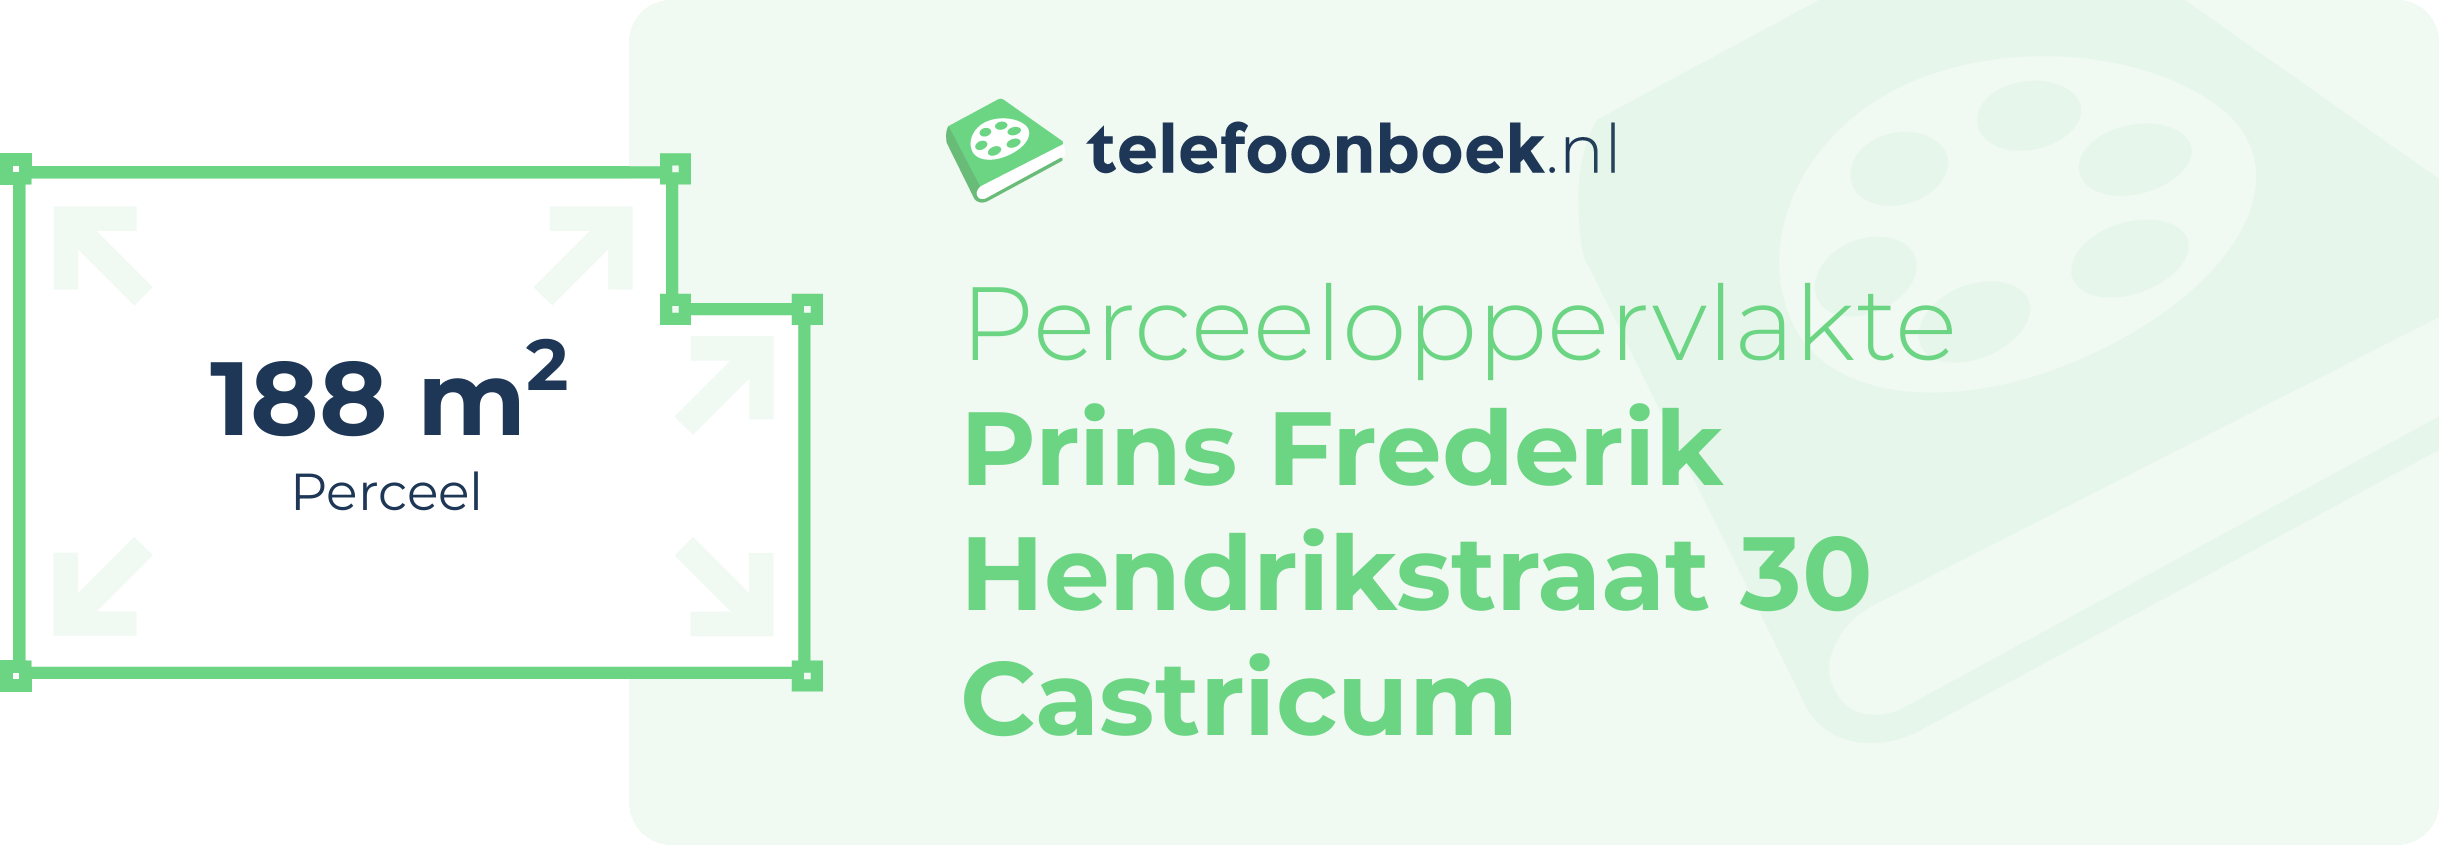 Perceeloppervlakte Prins Frederik Hendrikstraat 30 Castricum